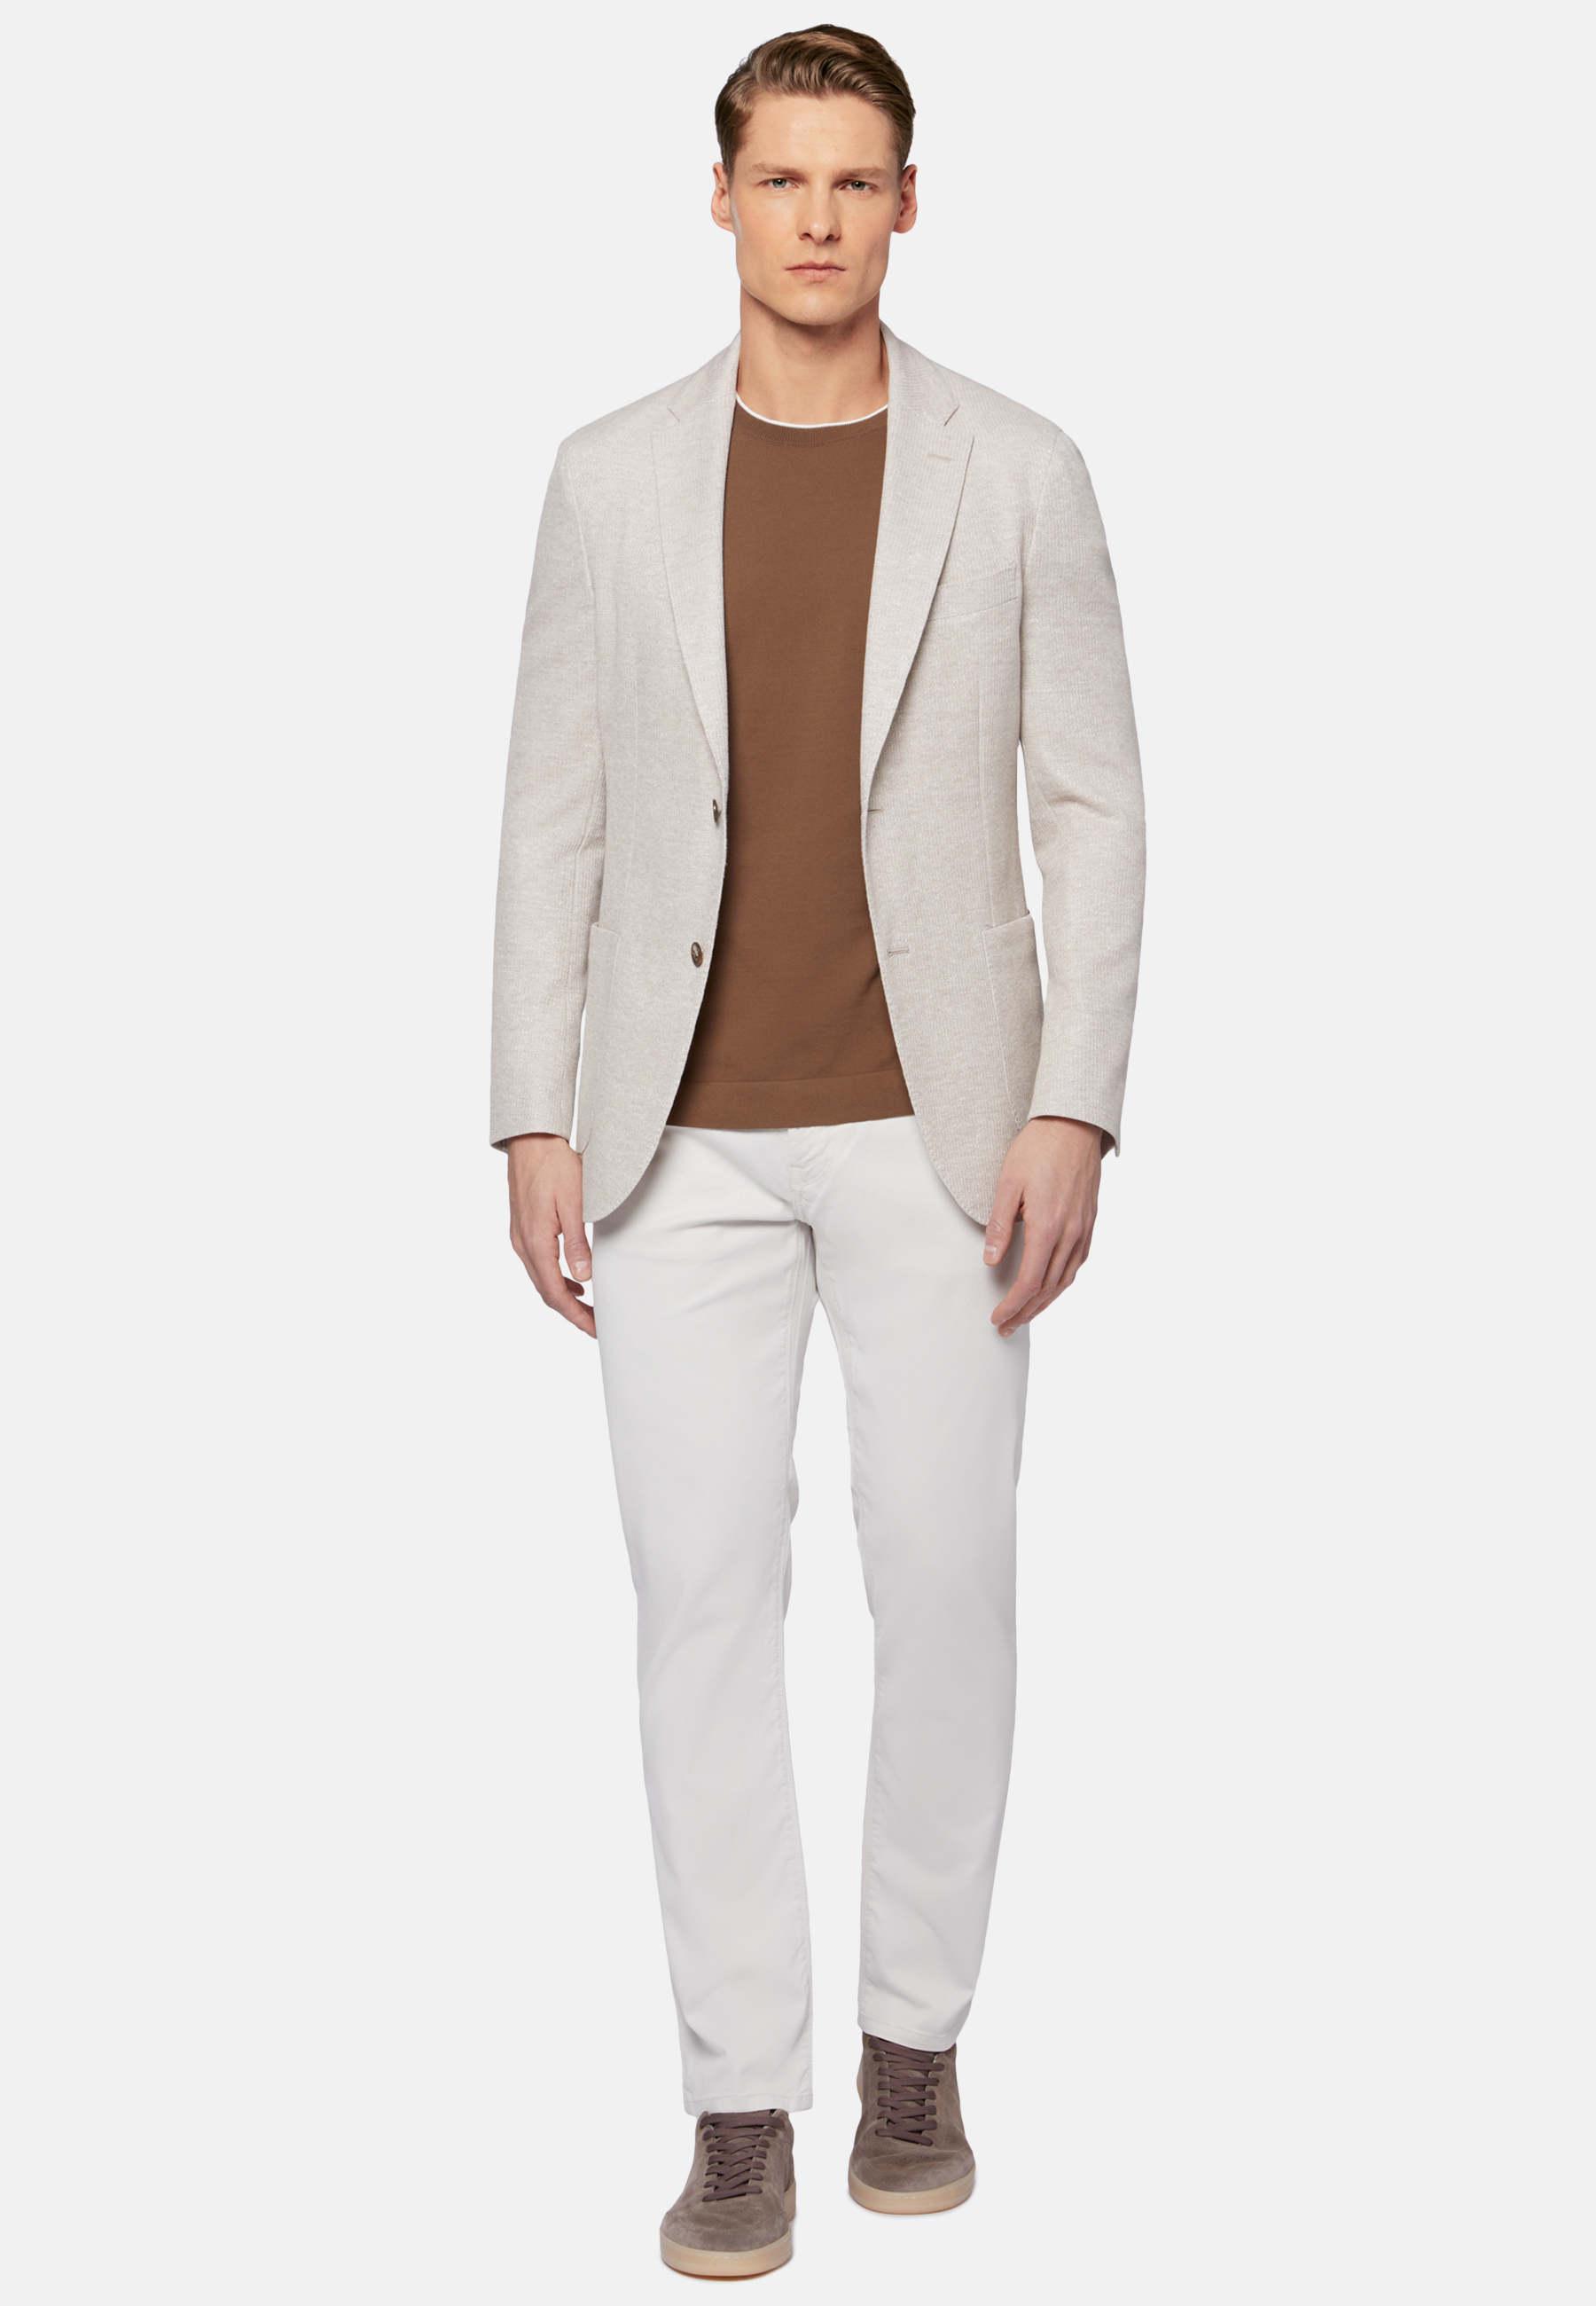 Beige Melange Linen/Cotton B Jersey Jacket